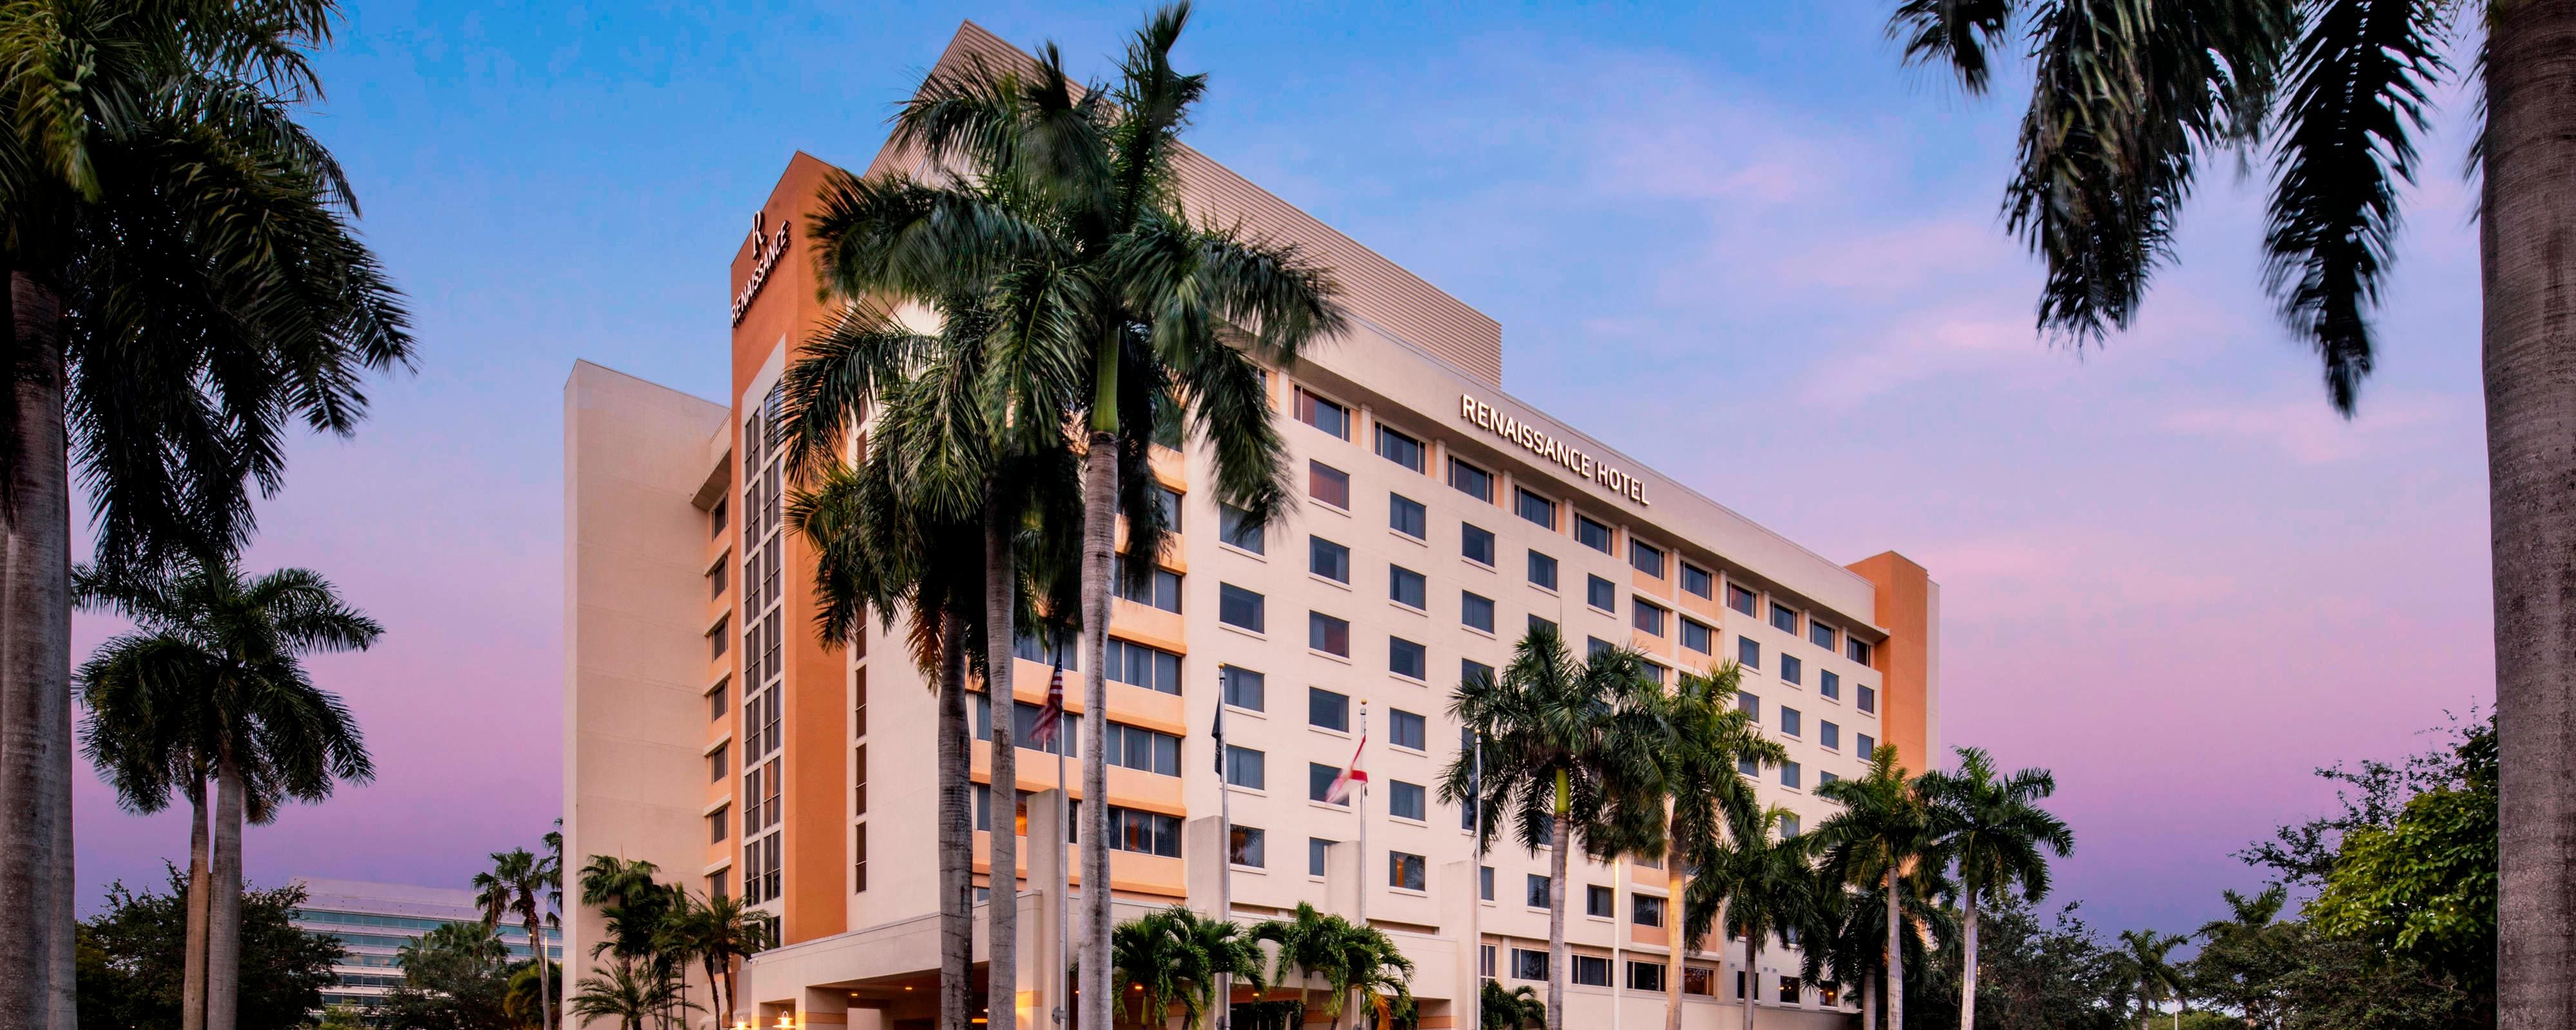 Hotels in Plantation, FL | Renaissance Fort Lauderdale-Plantation Hotel